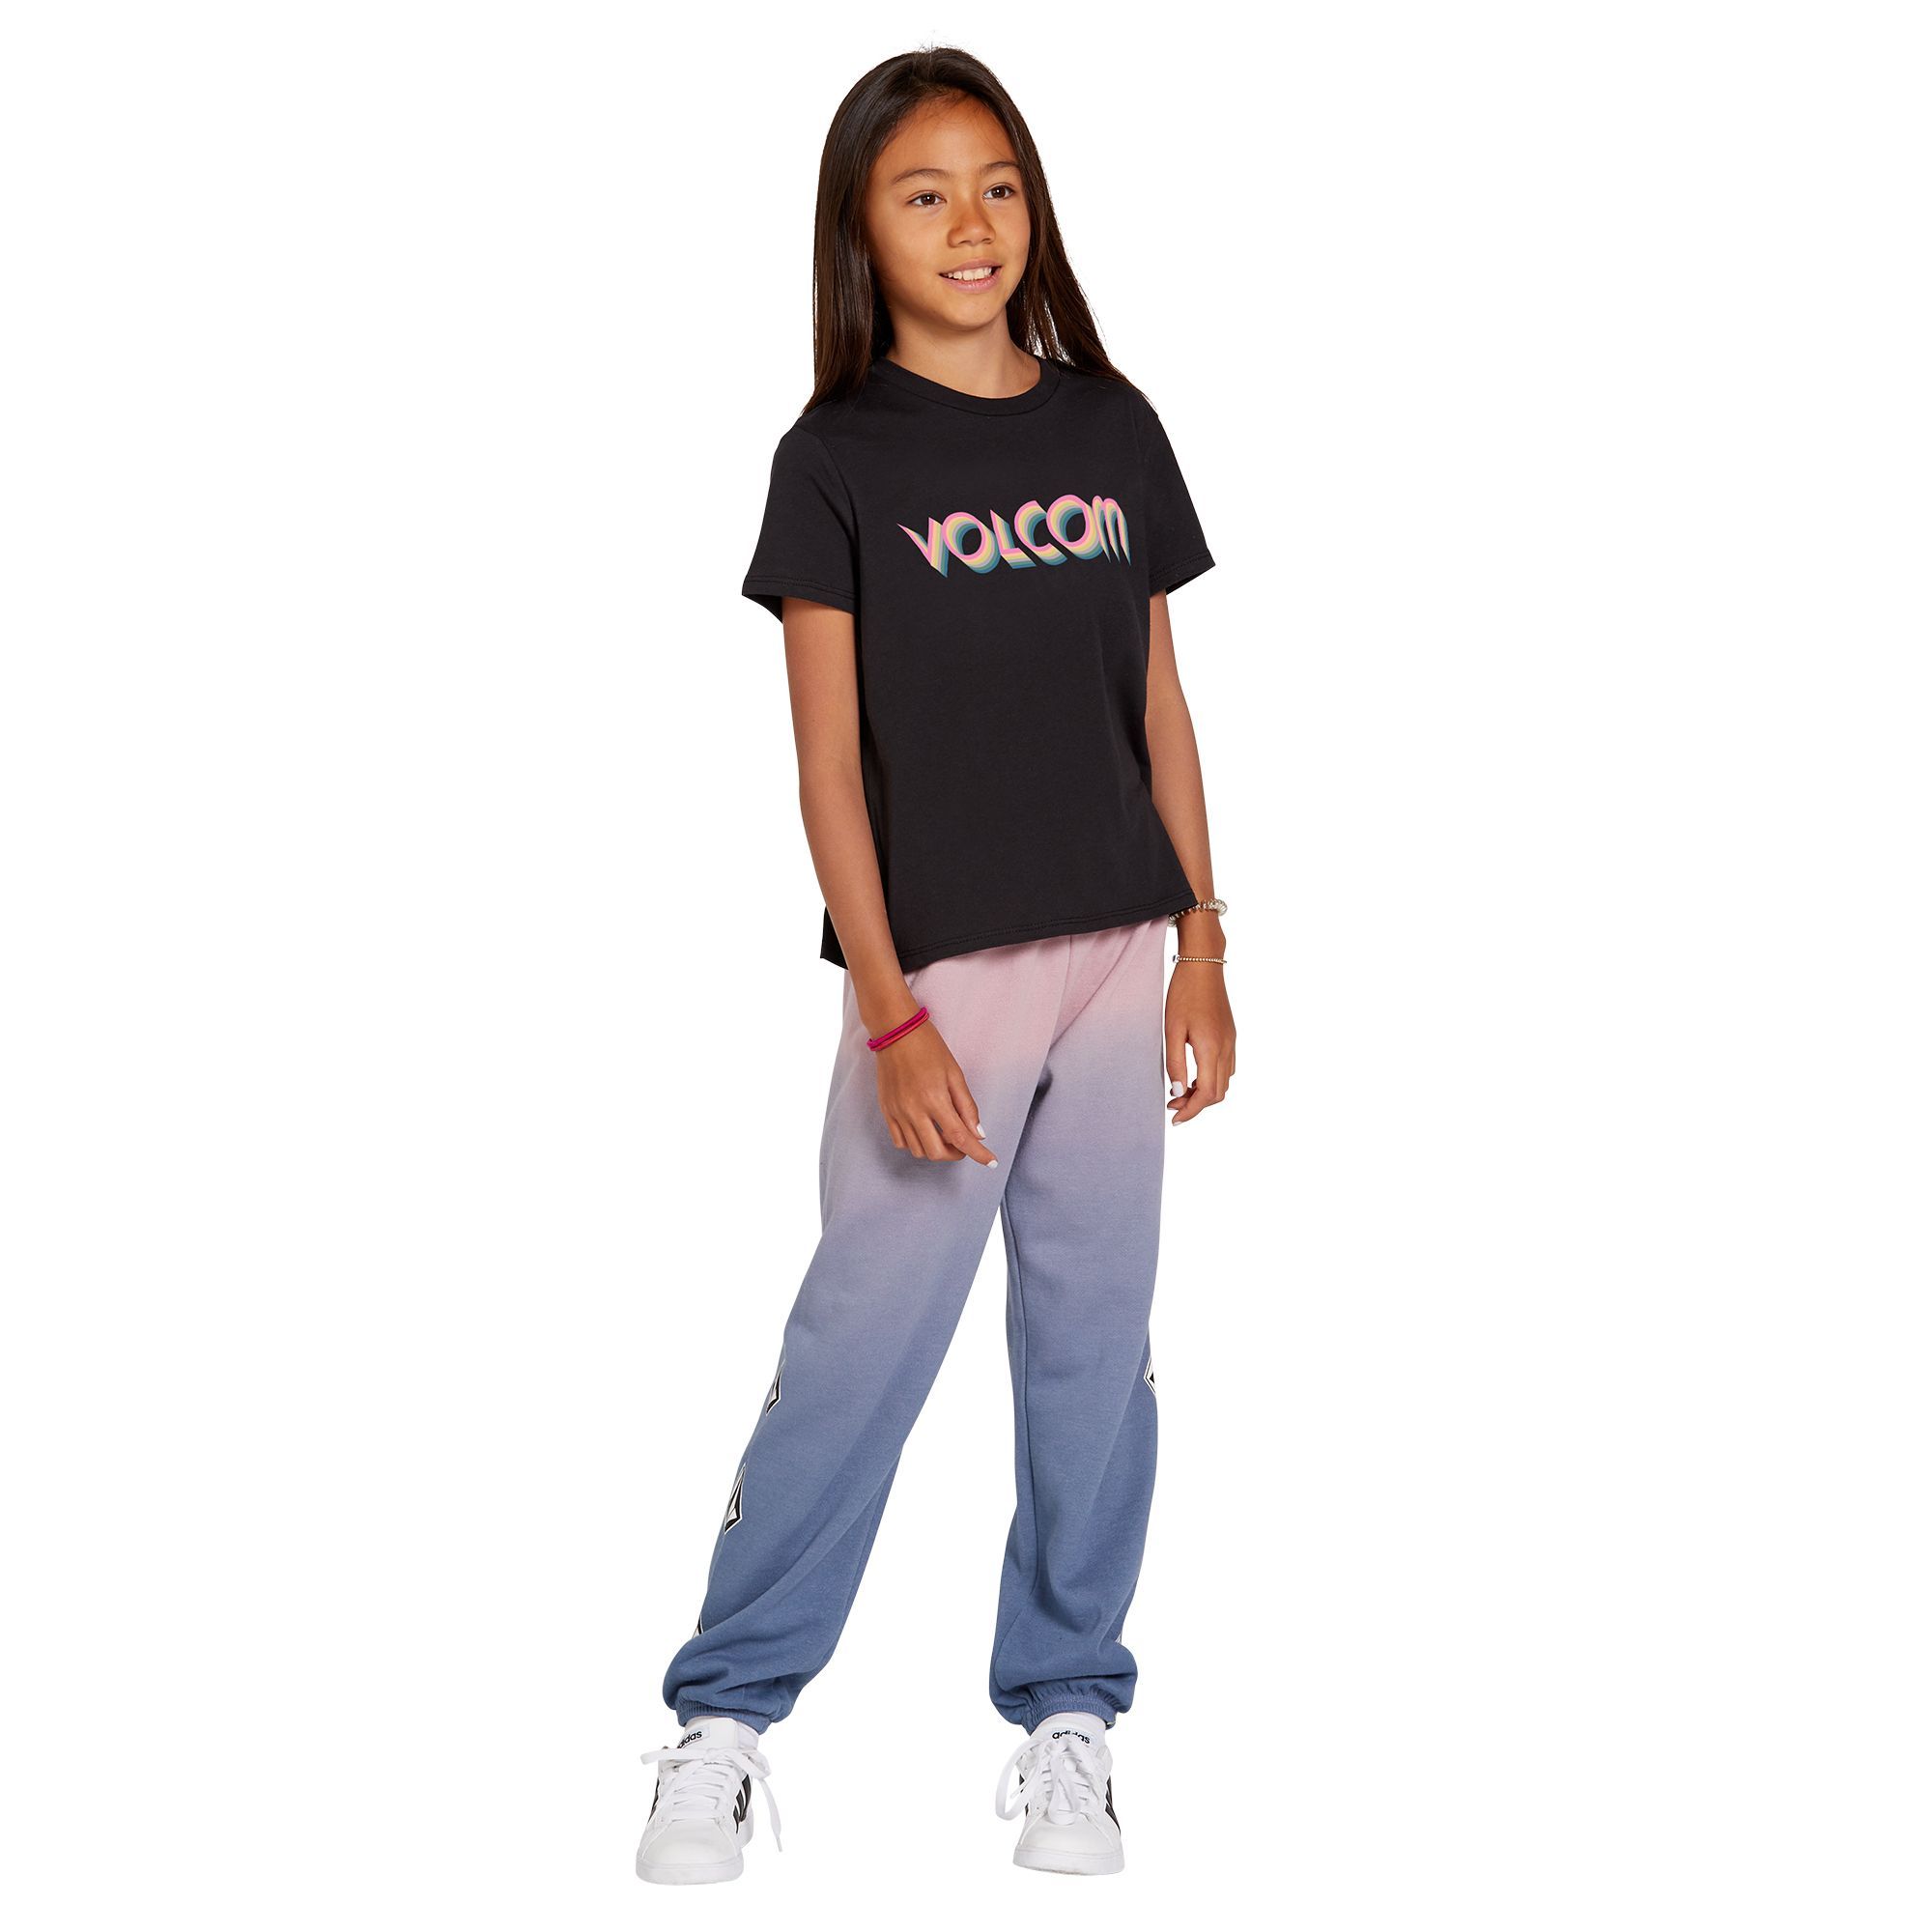 VOLCOM Last Party T-Shirt Girls Black KIDS APPAREL - Girl's Short Sleeve T-Shirts Volcom S 